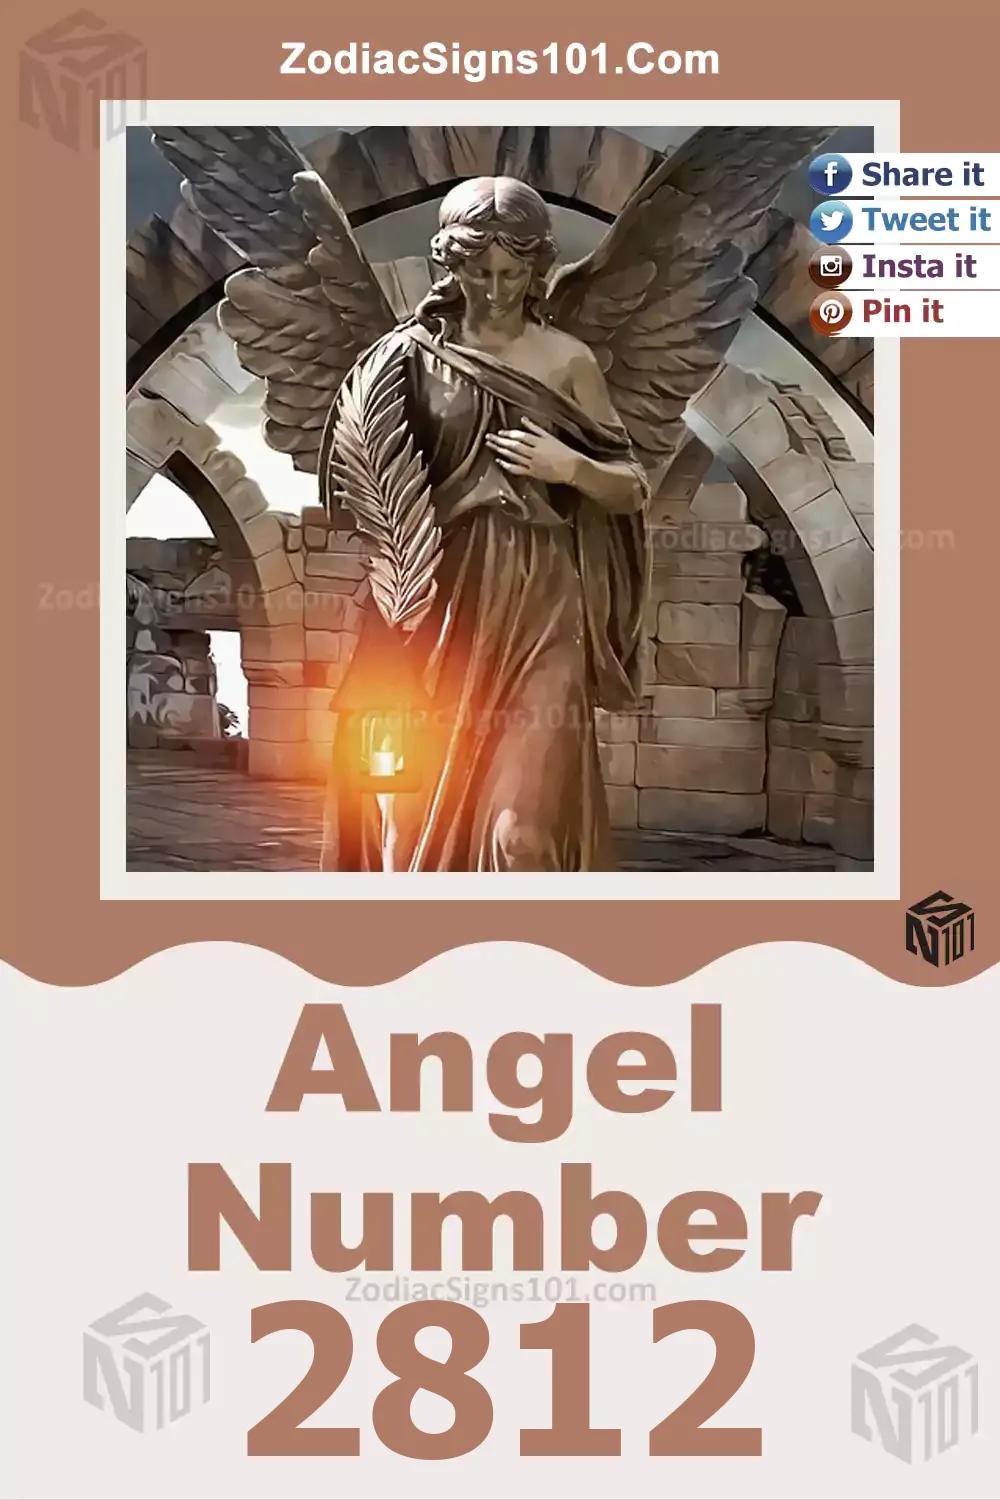 2812-Angel-Number-Meaning.jpg